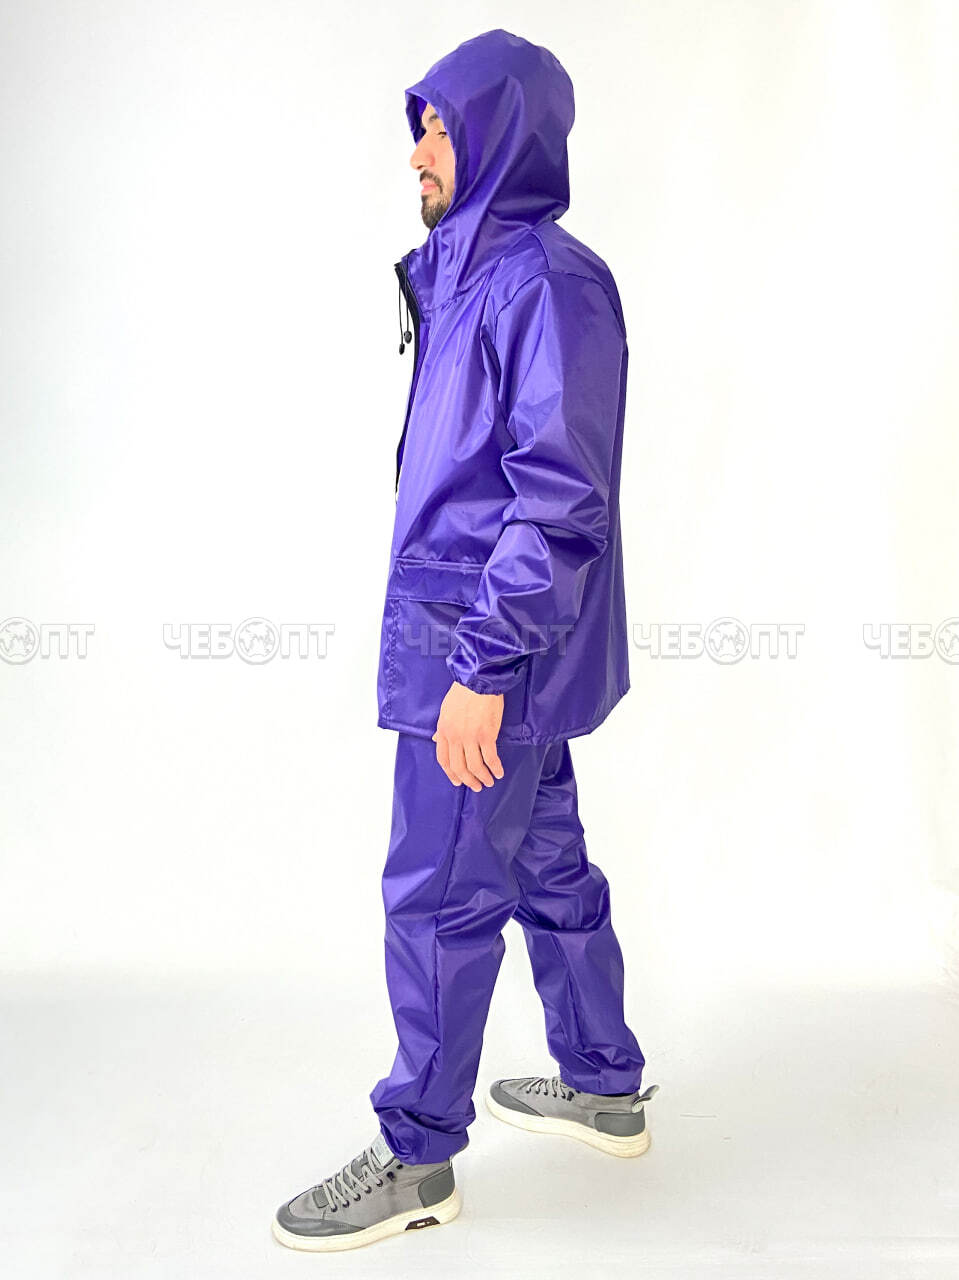 Костюм-дождевик (куртка, брюки),ЧЕБПРО,размер 52-54,100% полиэстер, Арт. ДожКостМуж/фиолетовый, МПС [15] СобПр. ЧЕБОПТ.